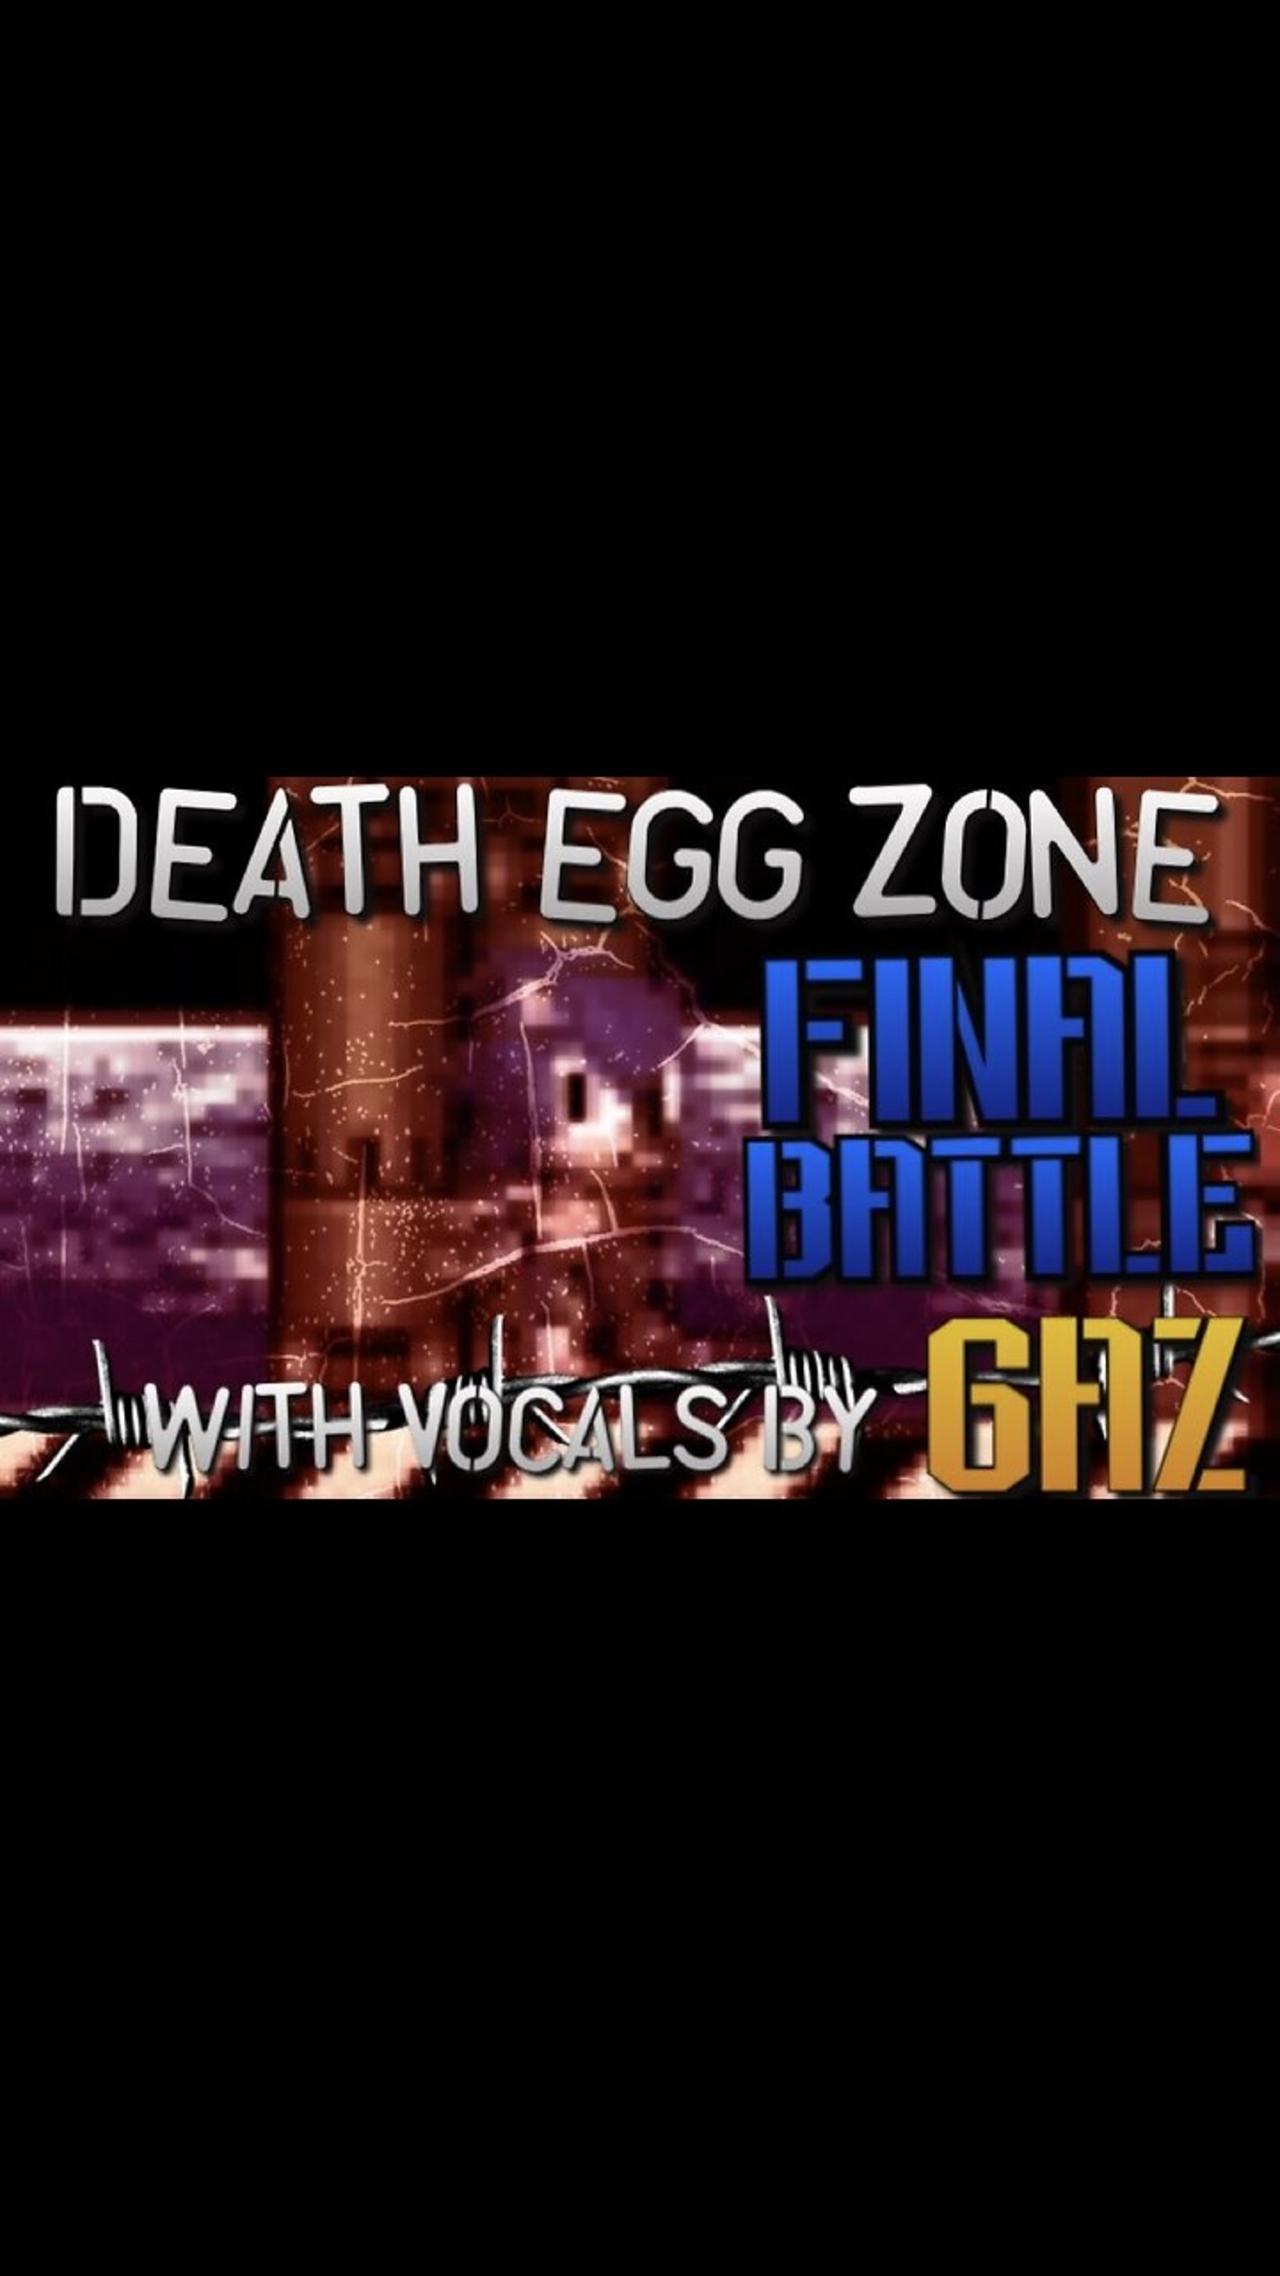 “Final Battle!” Death Egg Zone Boss (Sonic 2) PARODY song w. Vocals